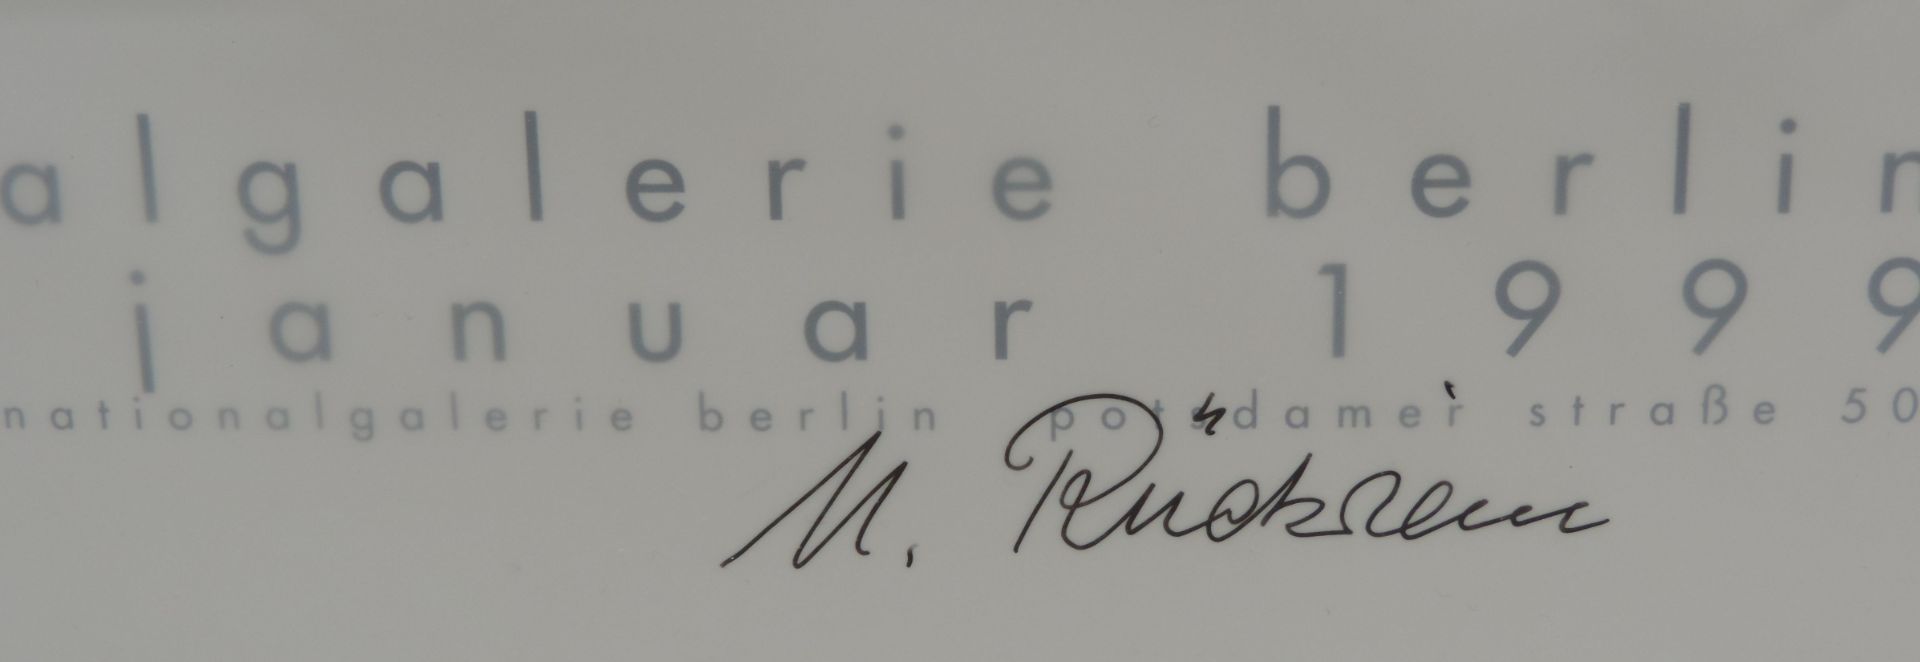 RÜCKRIEM, Ullrich, *30.9.1938 Düsseldorf, Steinmetzlehre, lebt u arb Köln/London, Prof Hochschule - Image 2 of 2